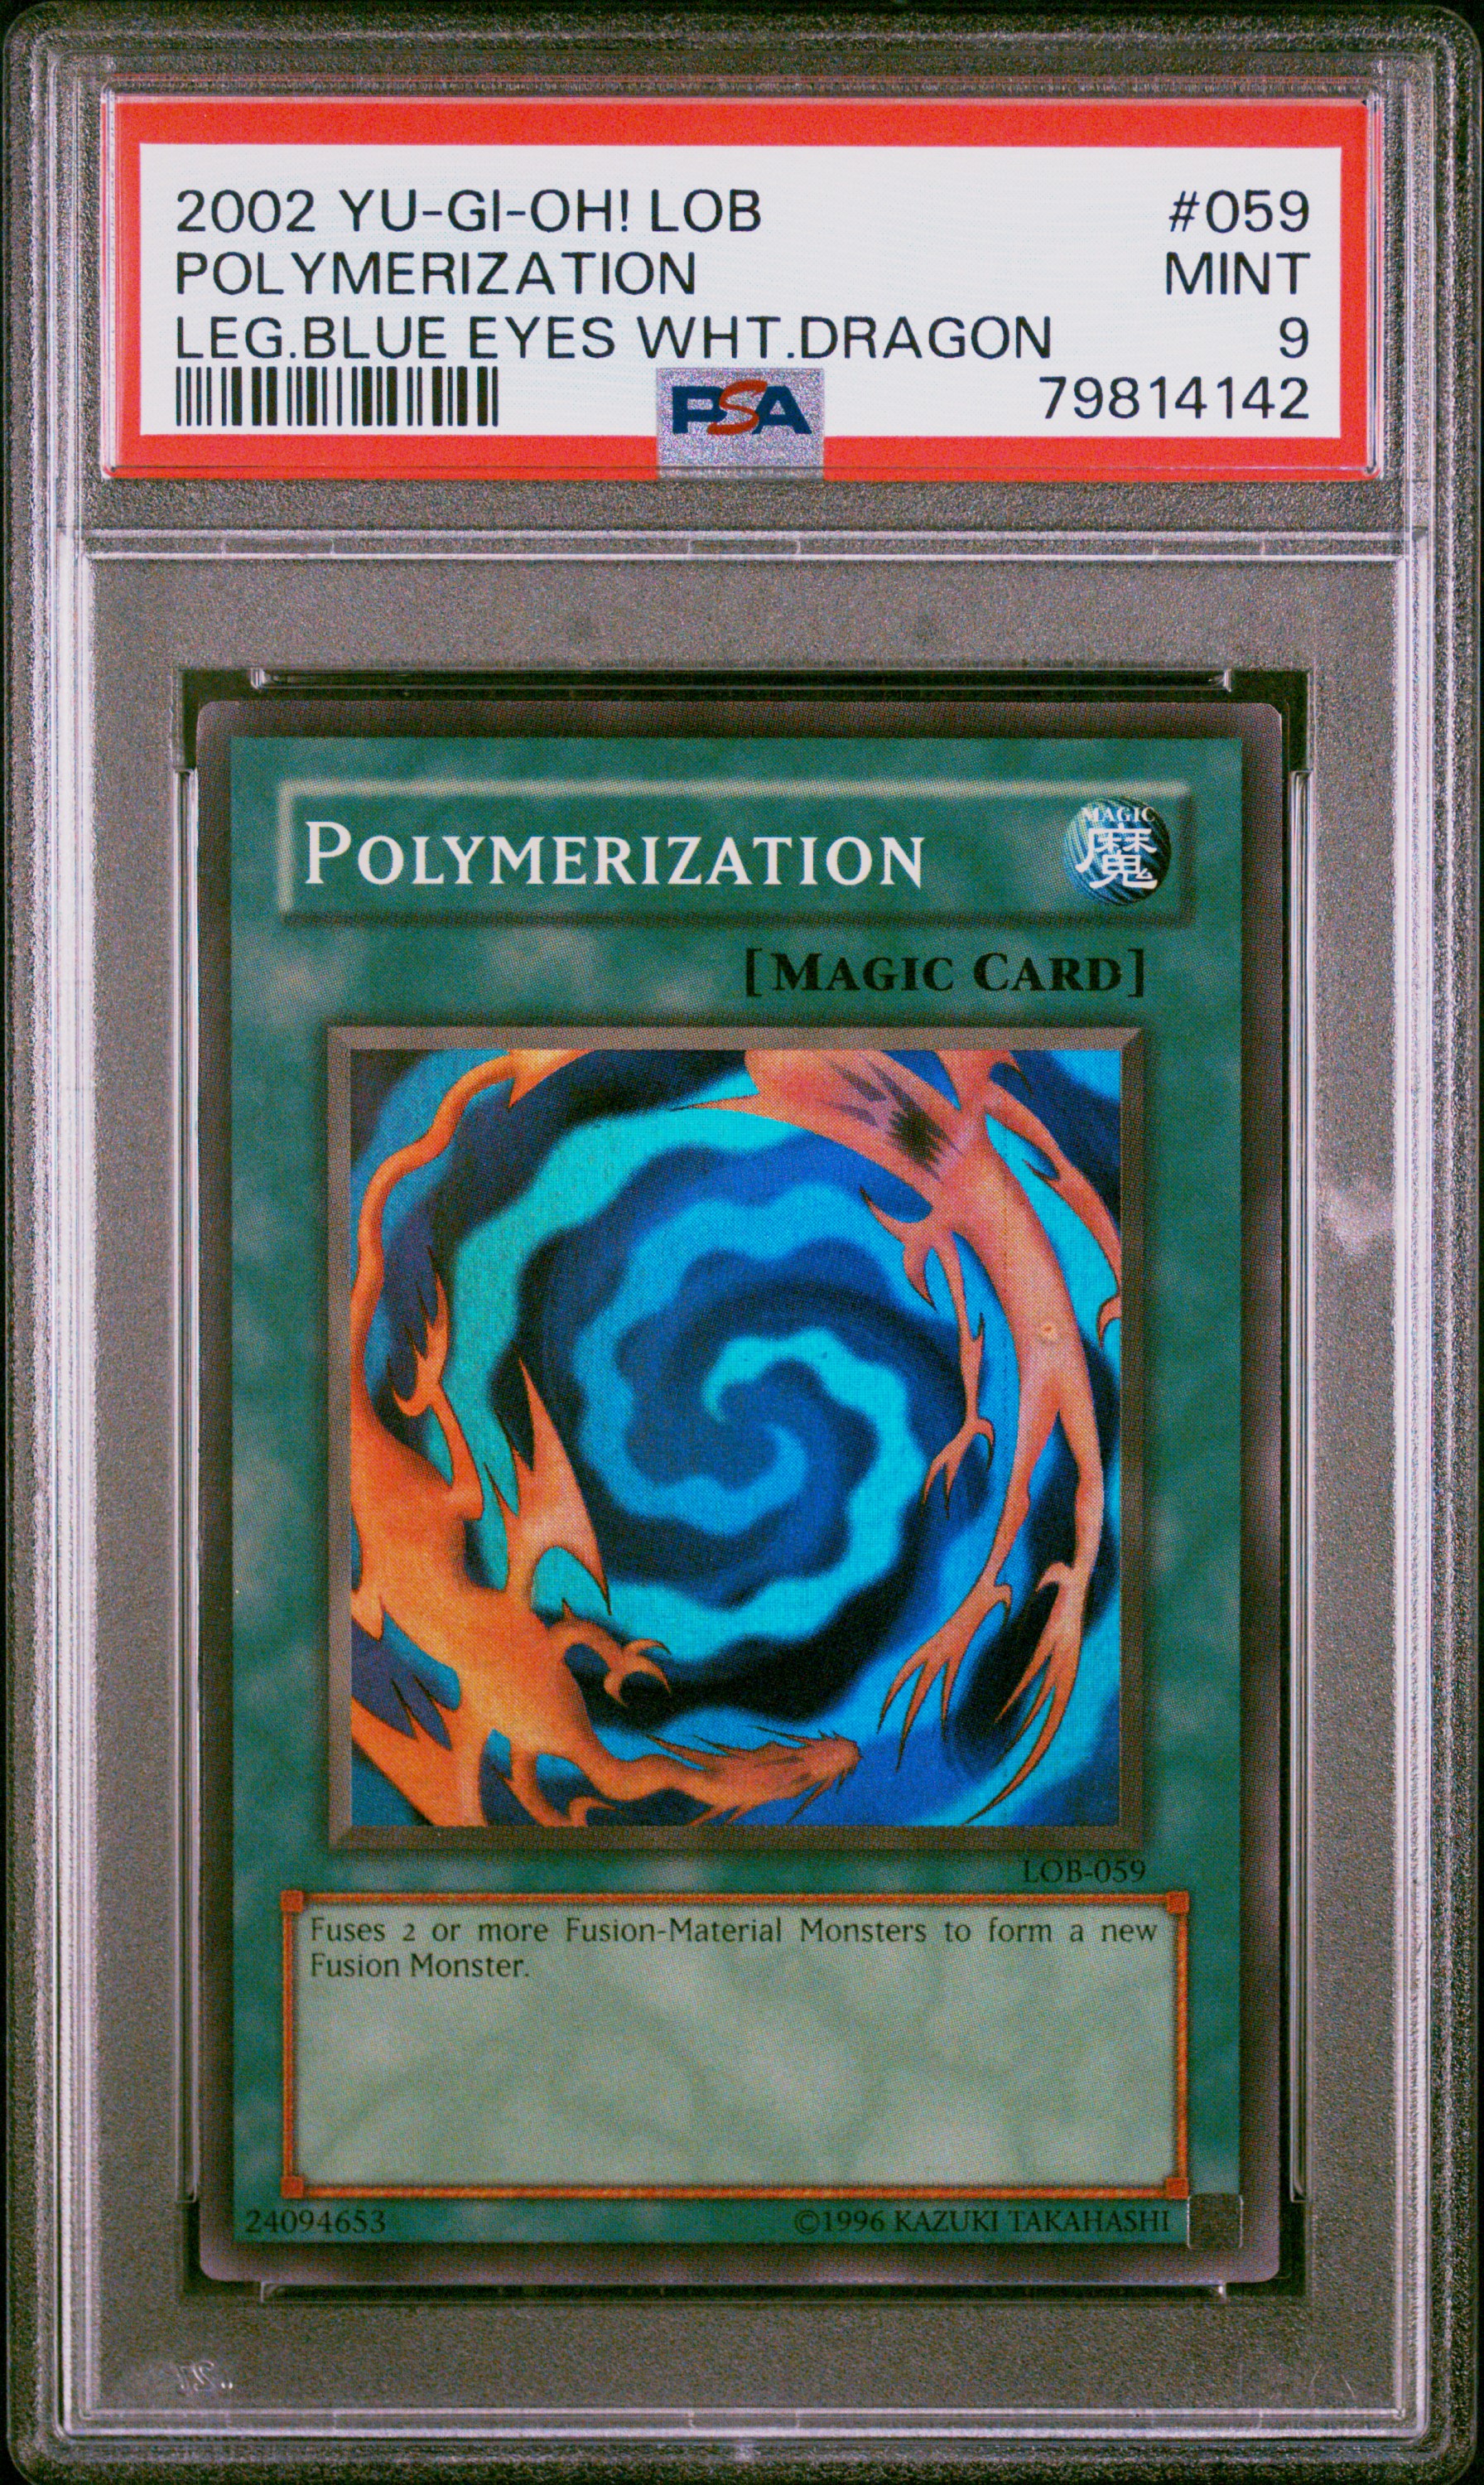 2002 Yu-Gi-Oh! Lob-Legend Of Blue Eyes White Dragon #059 Polymerization – PSA MINT 9